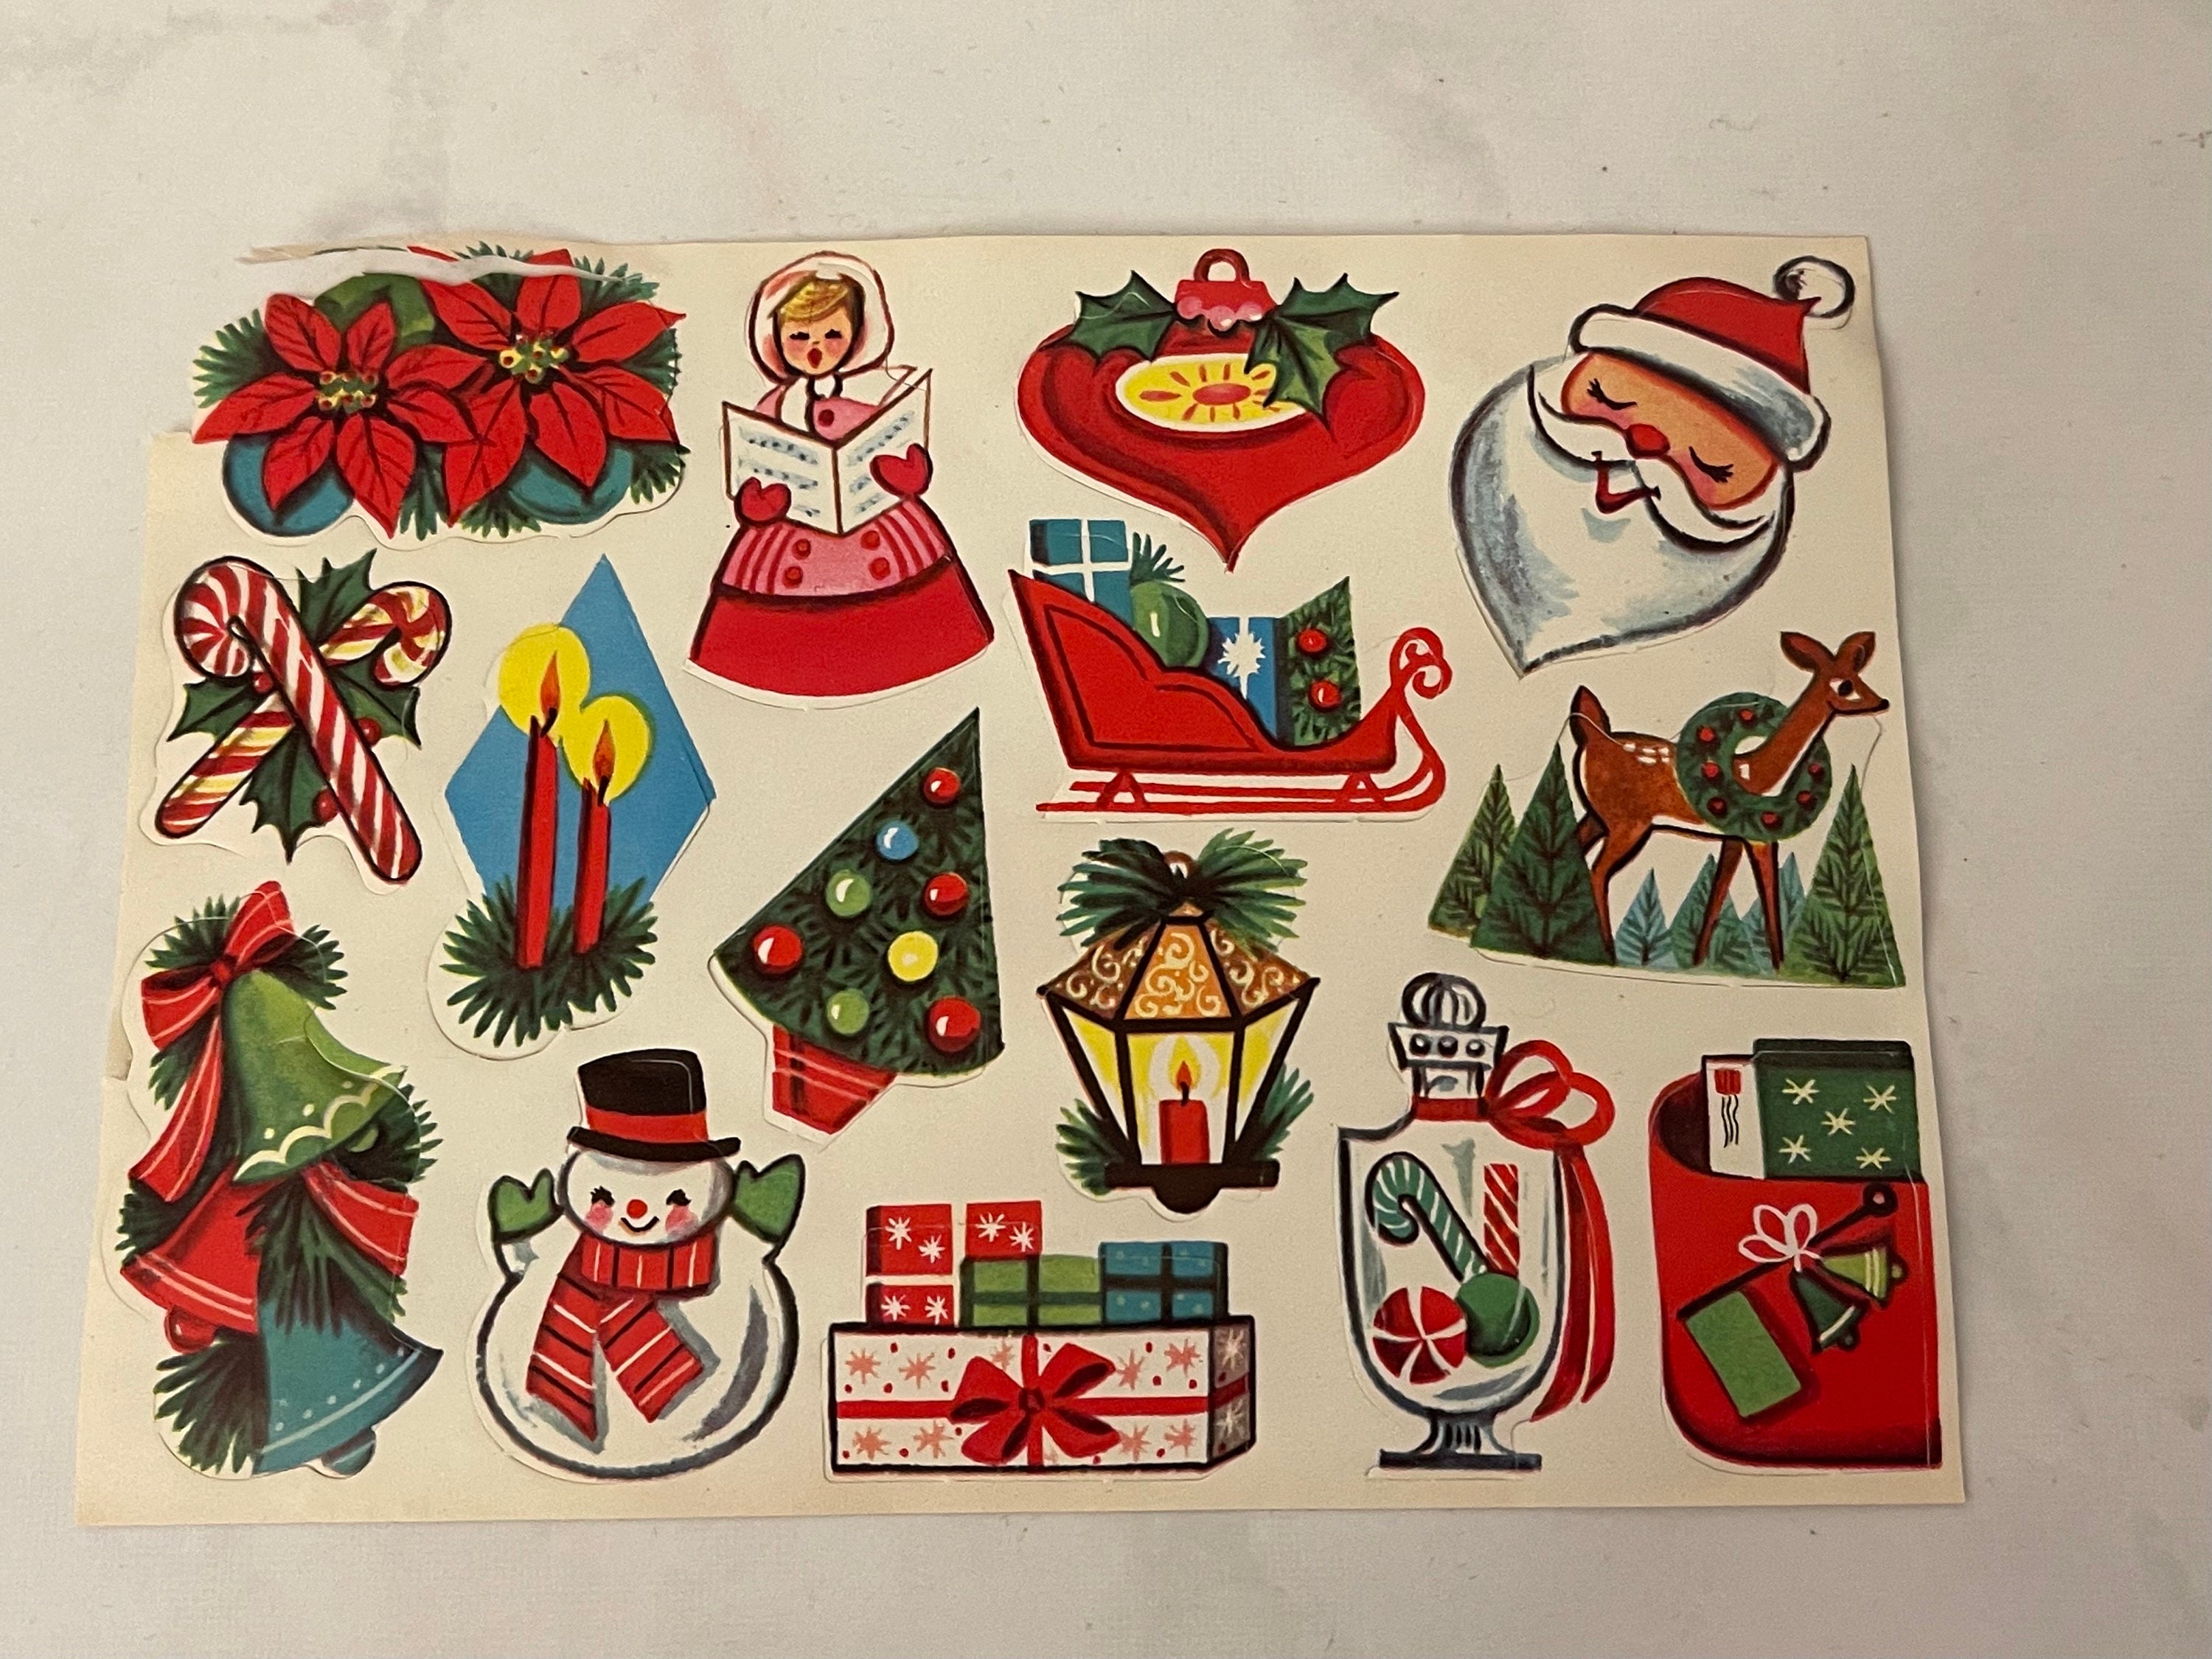 On Sale Santa and Snowman Pocket Ornament Kits Felt Applique 